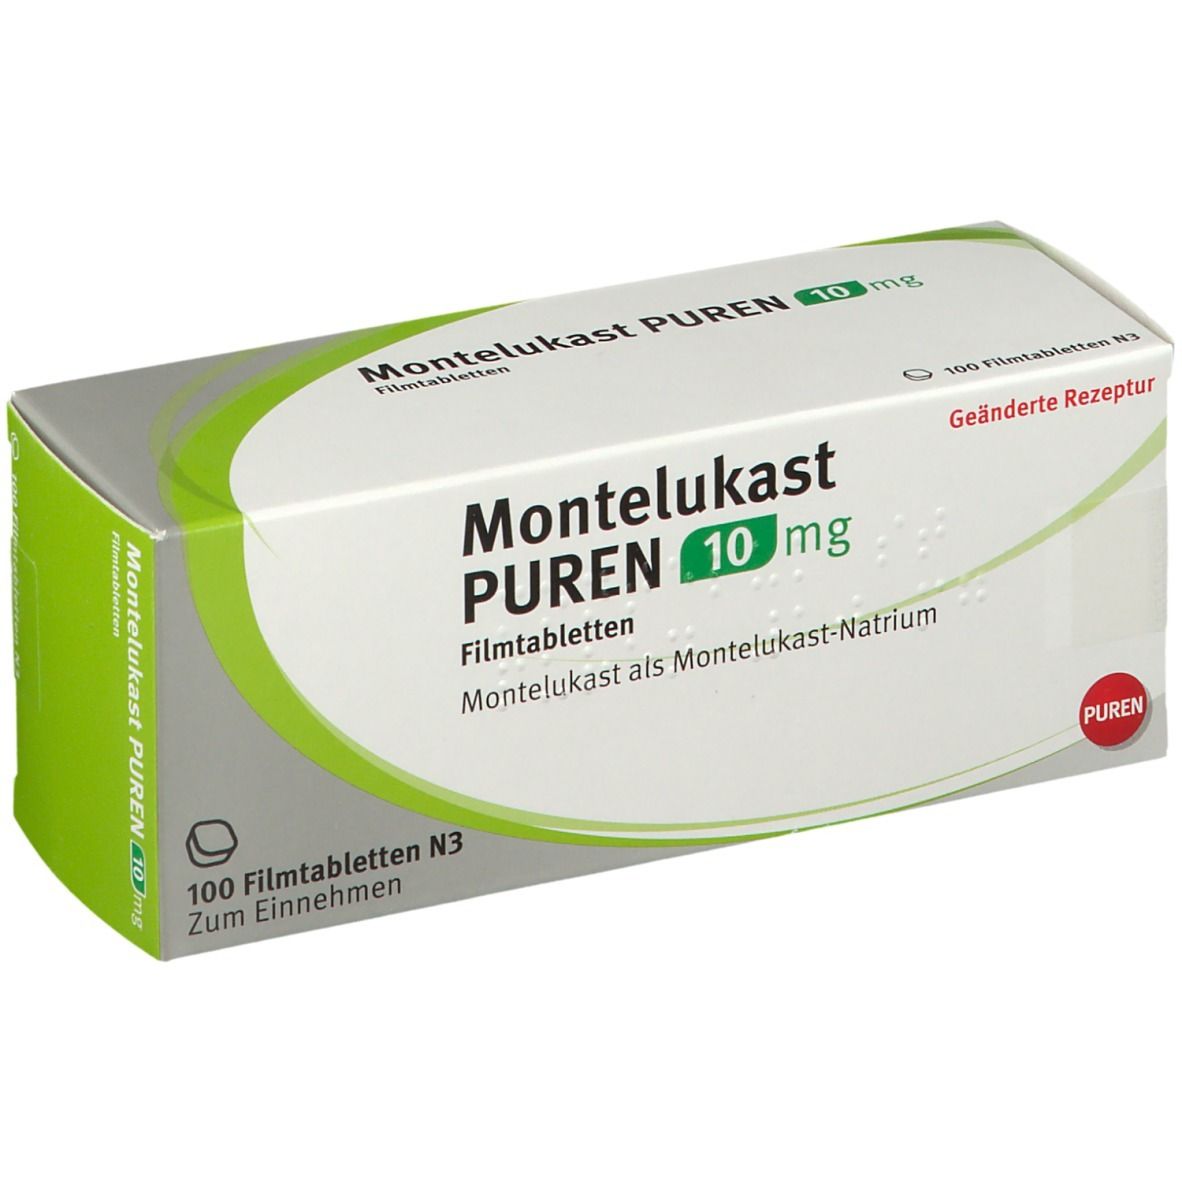 Montelukast PUREN 10 mg